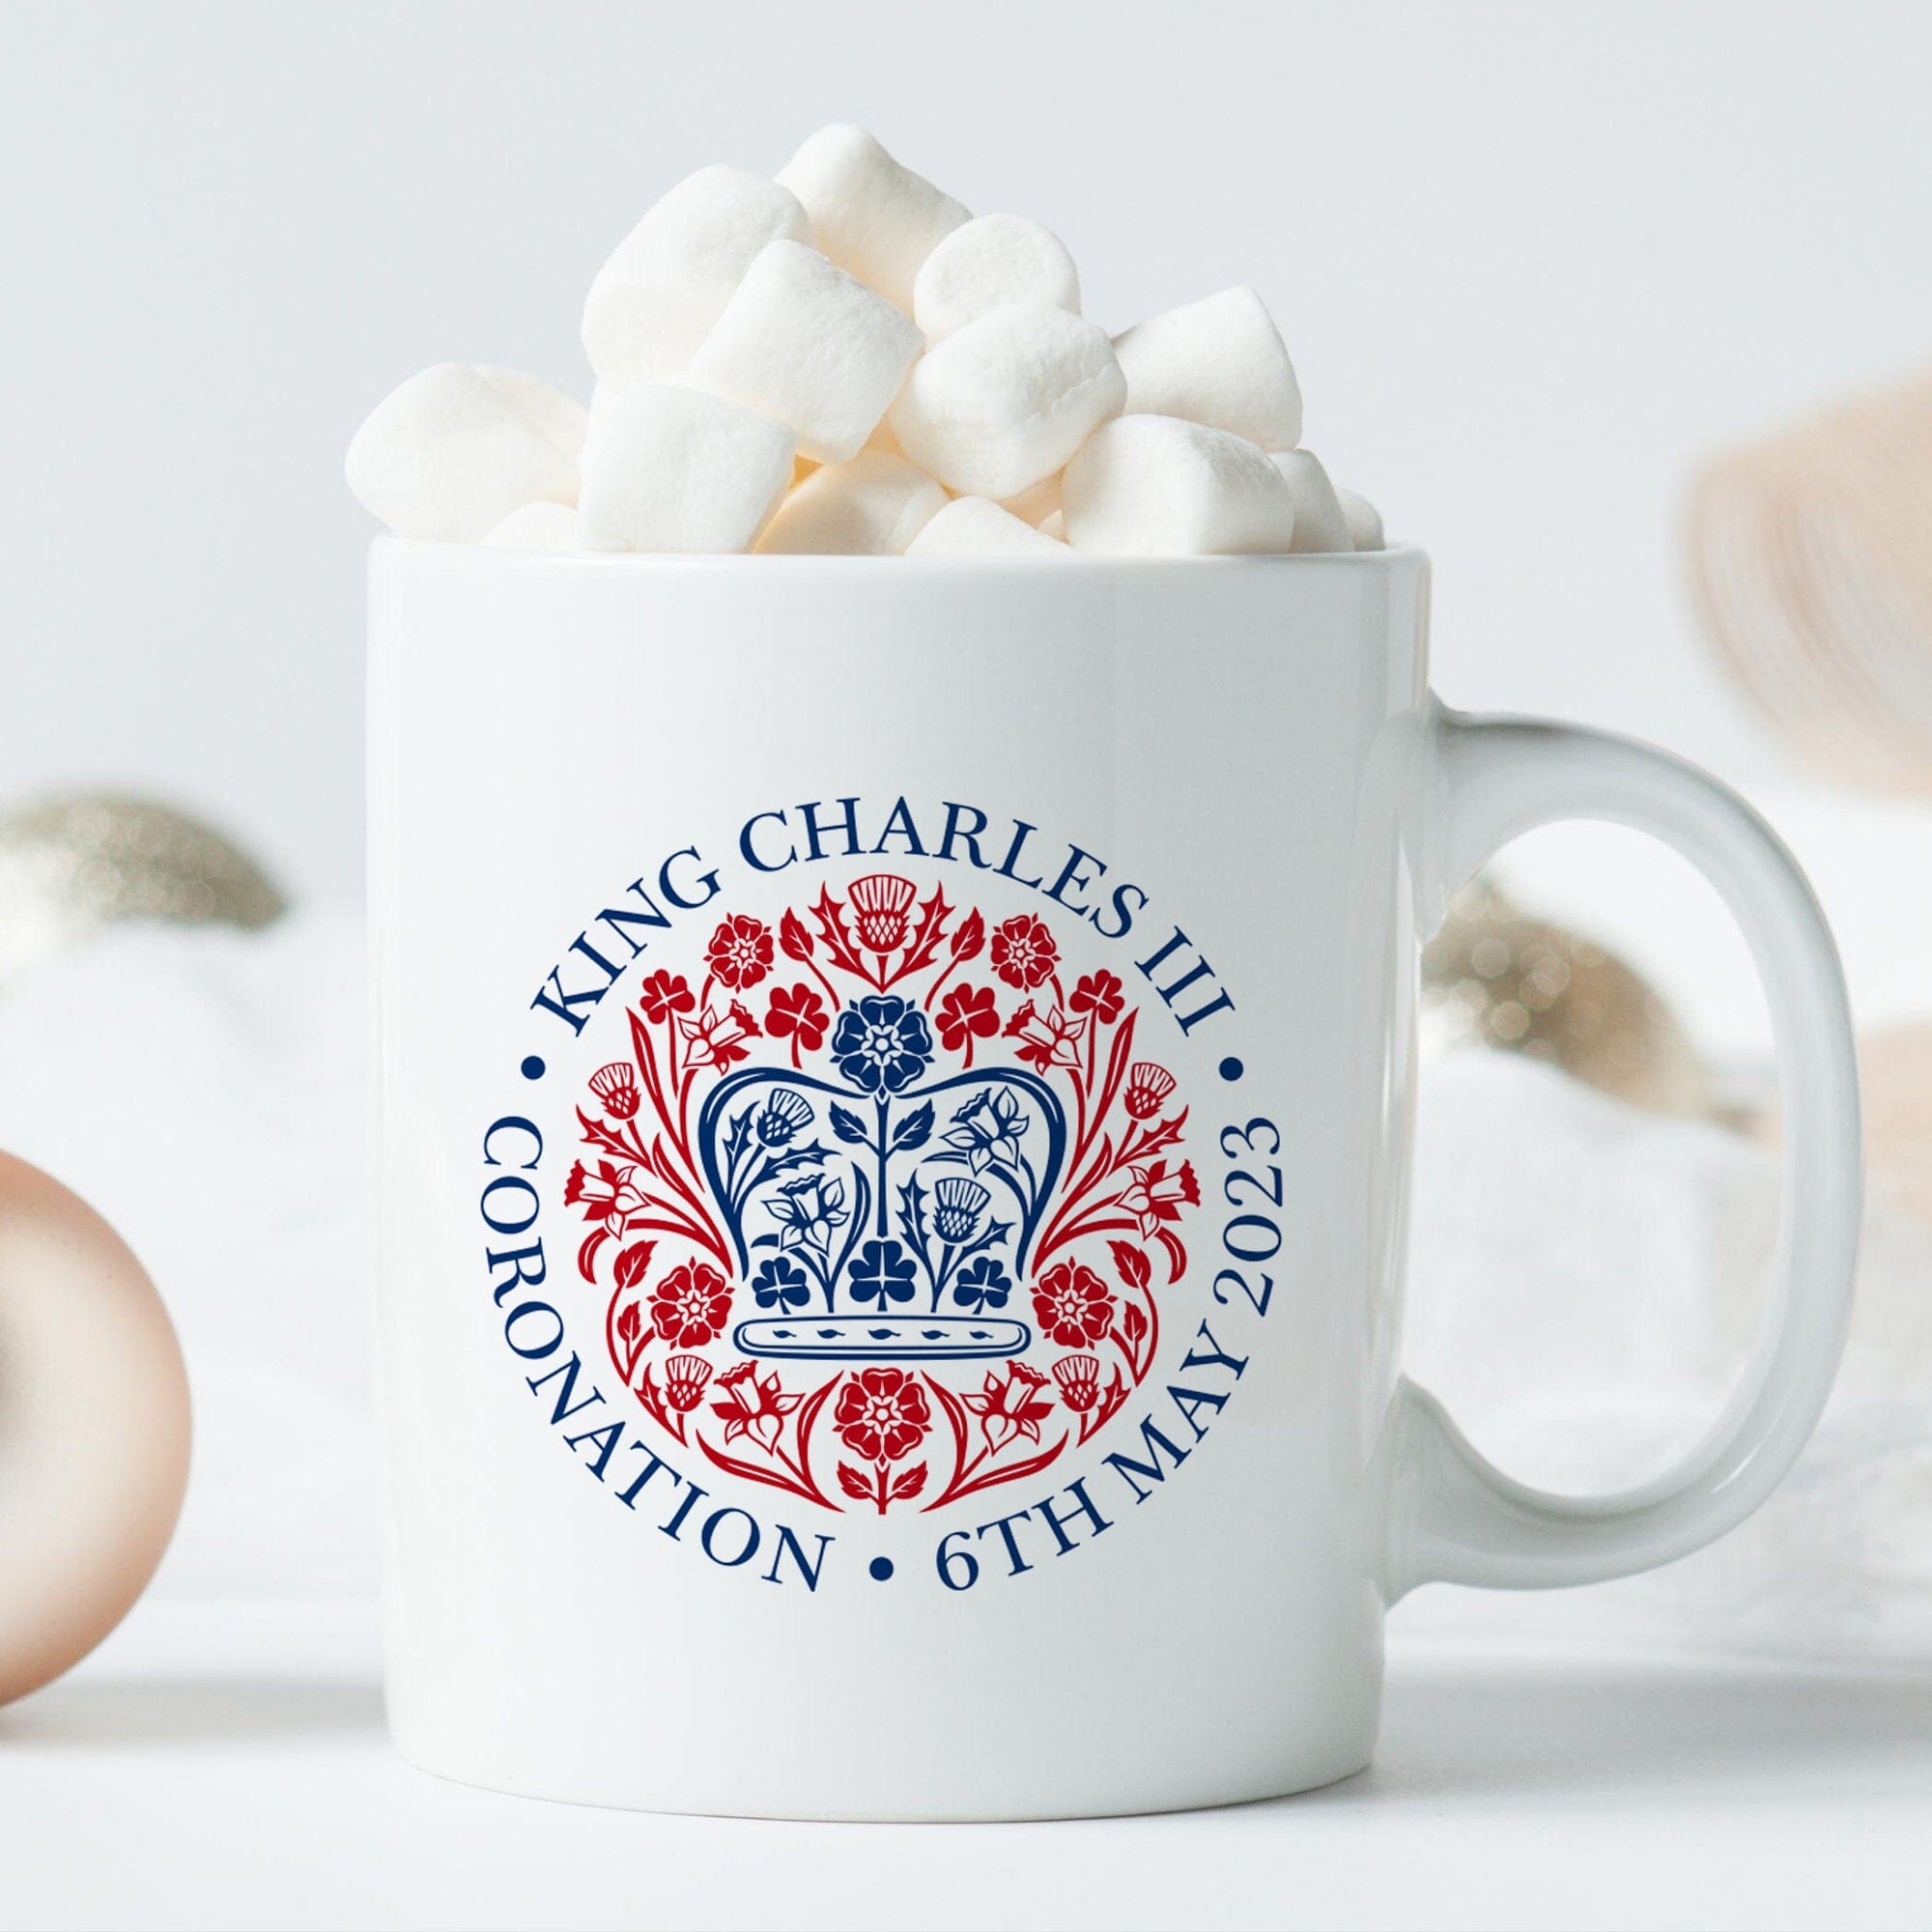 Hm King Charles Iii Coronation Official Emblem Mug, God Save The King, Celebration Gift For Her Him